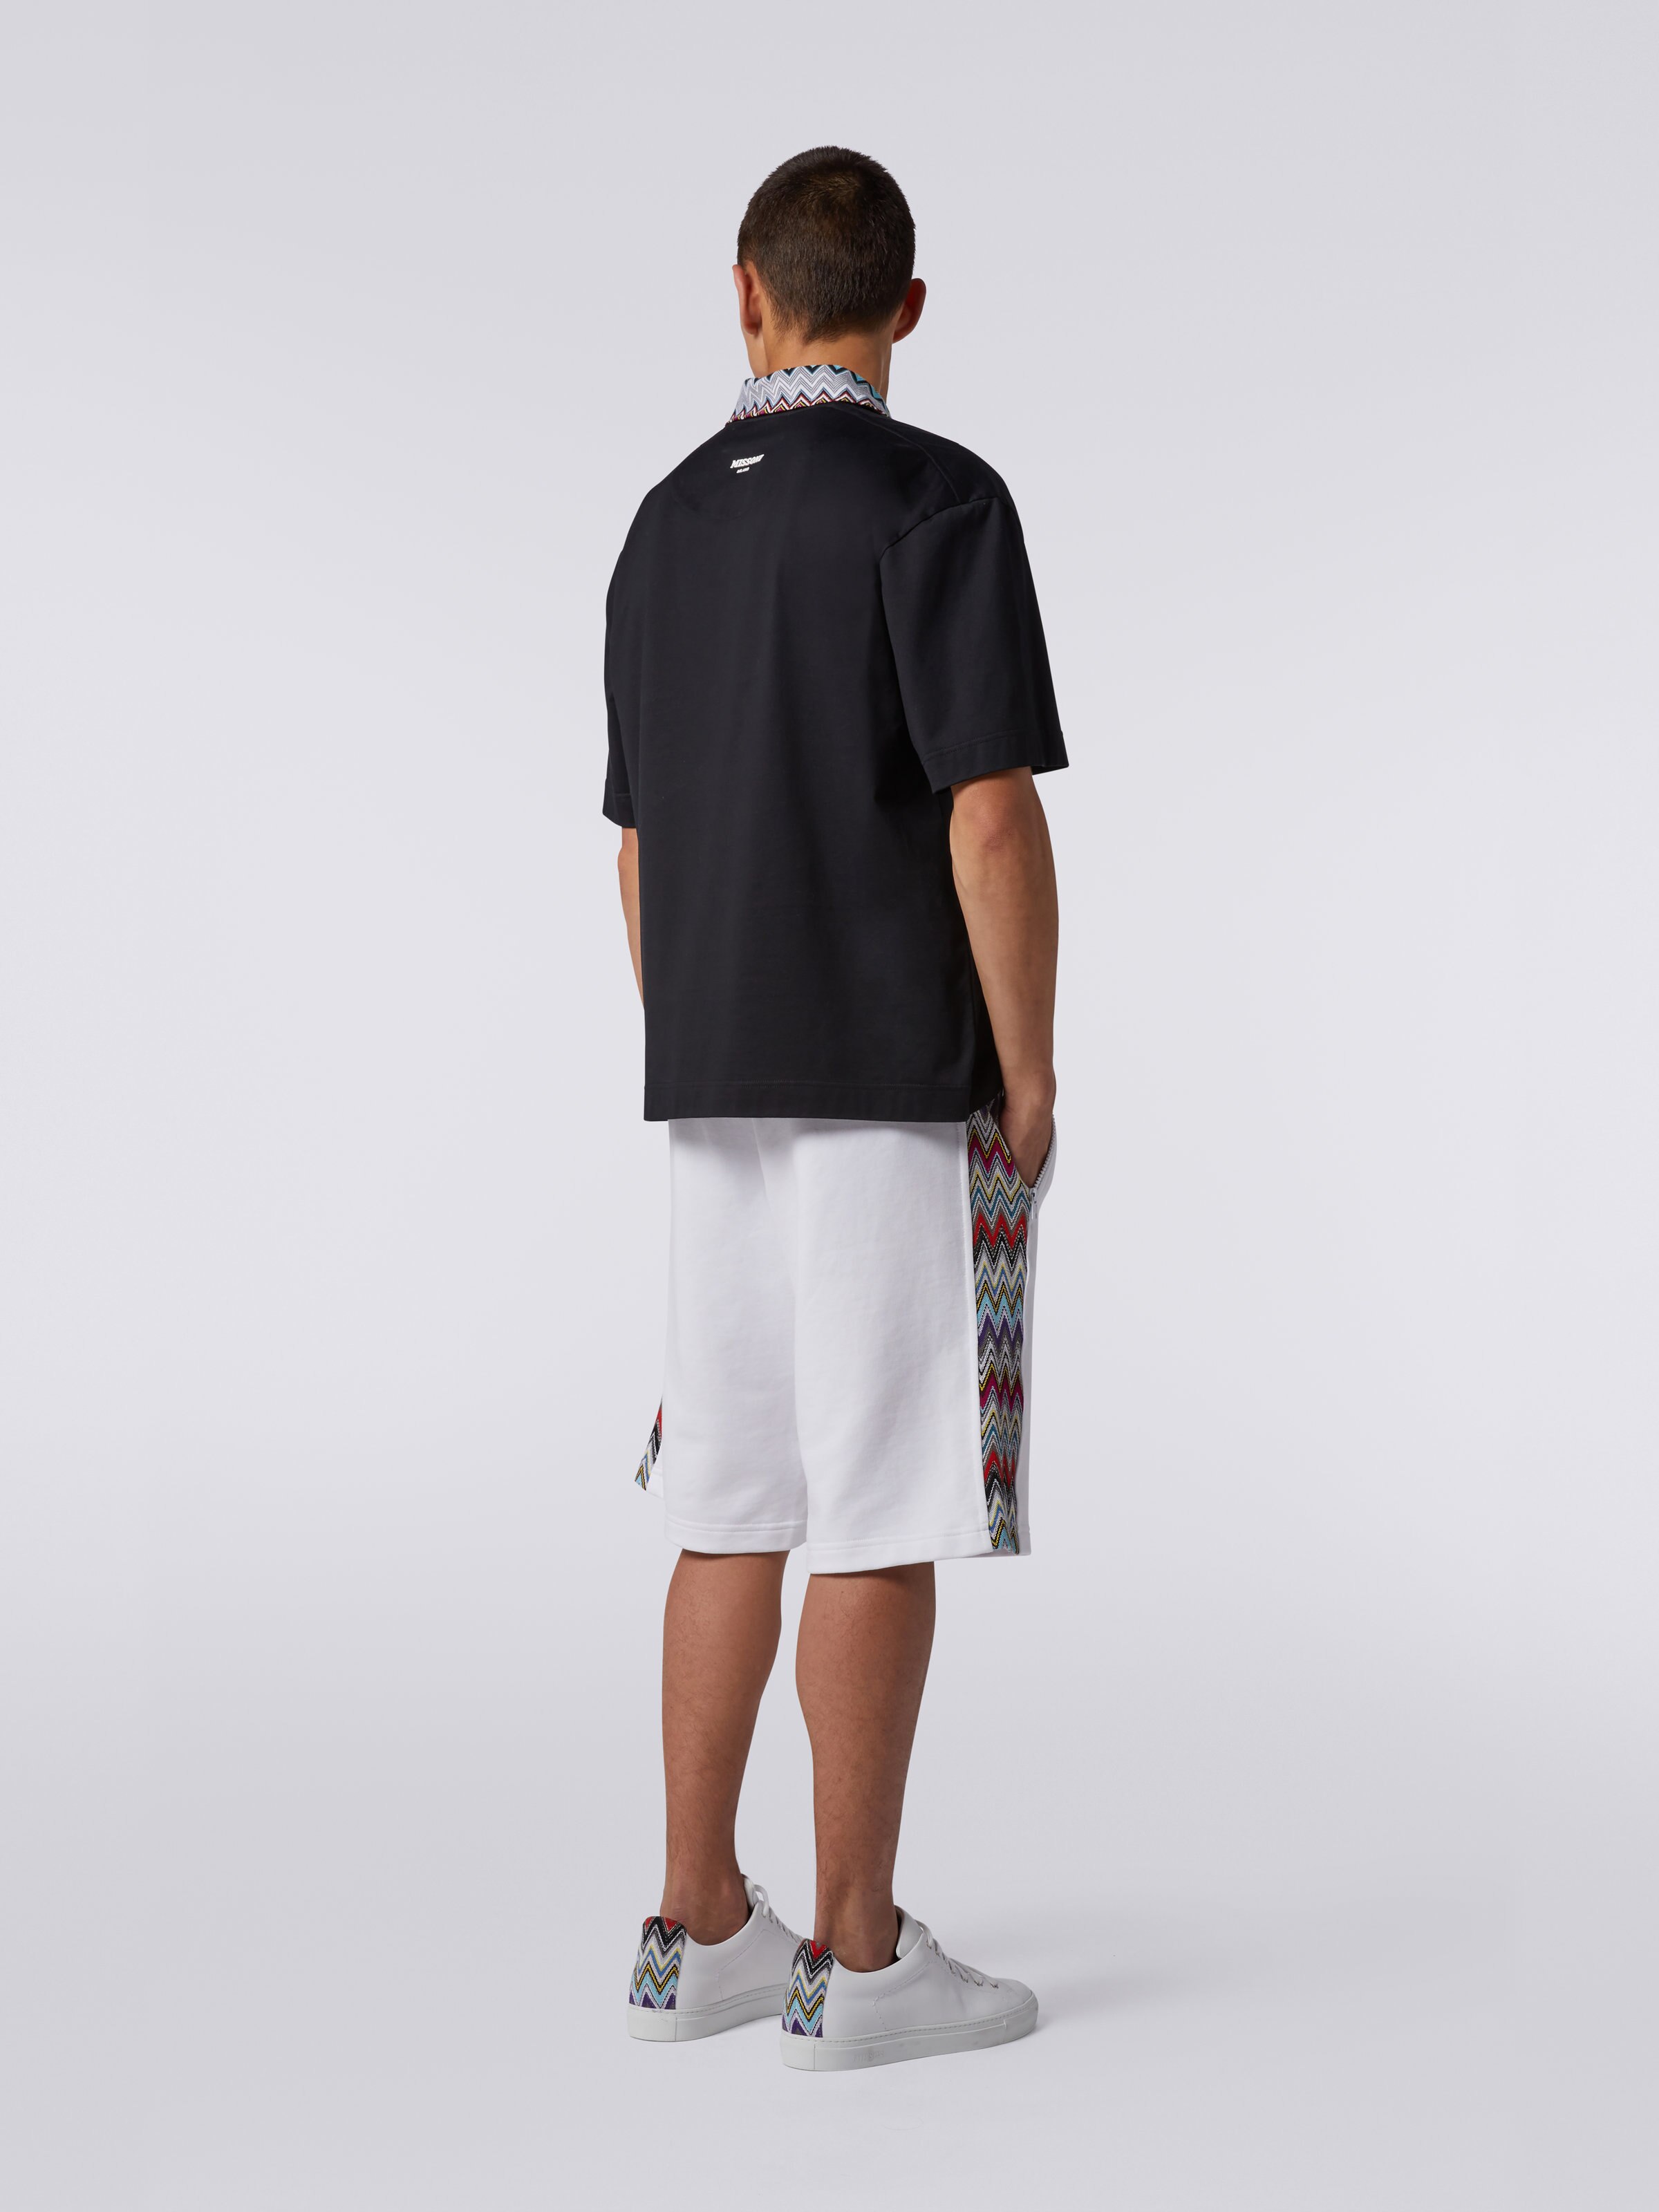 Cotton polo shirt with dégradé chevron pattern, Black    - 3